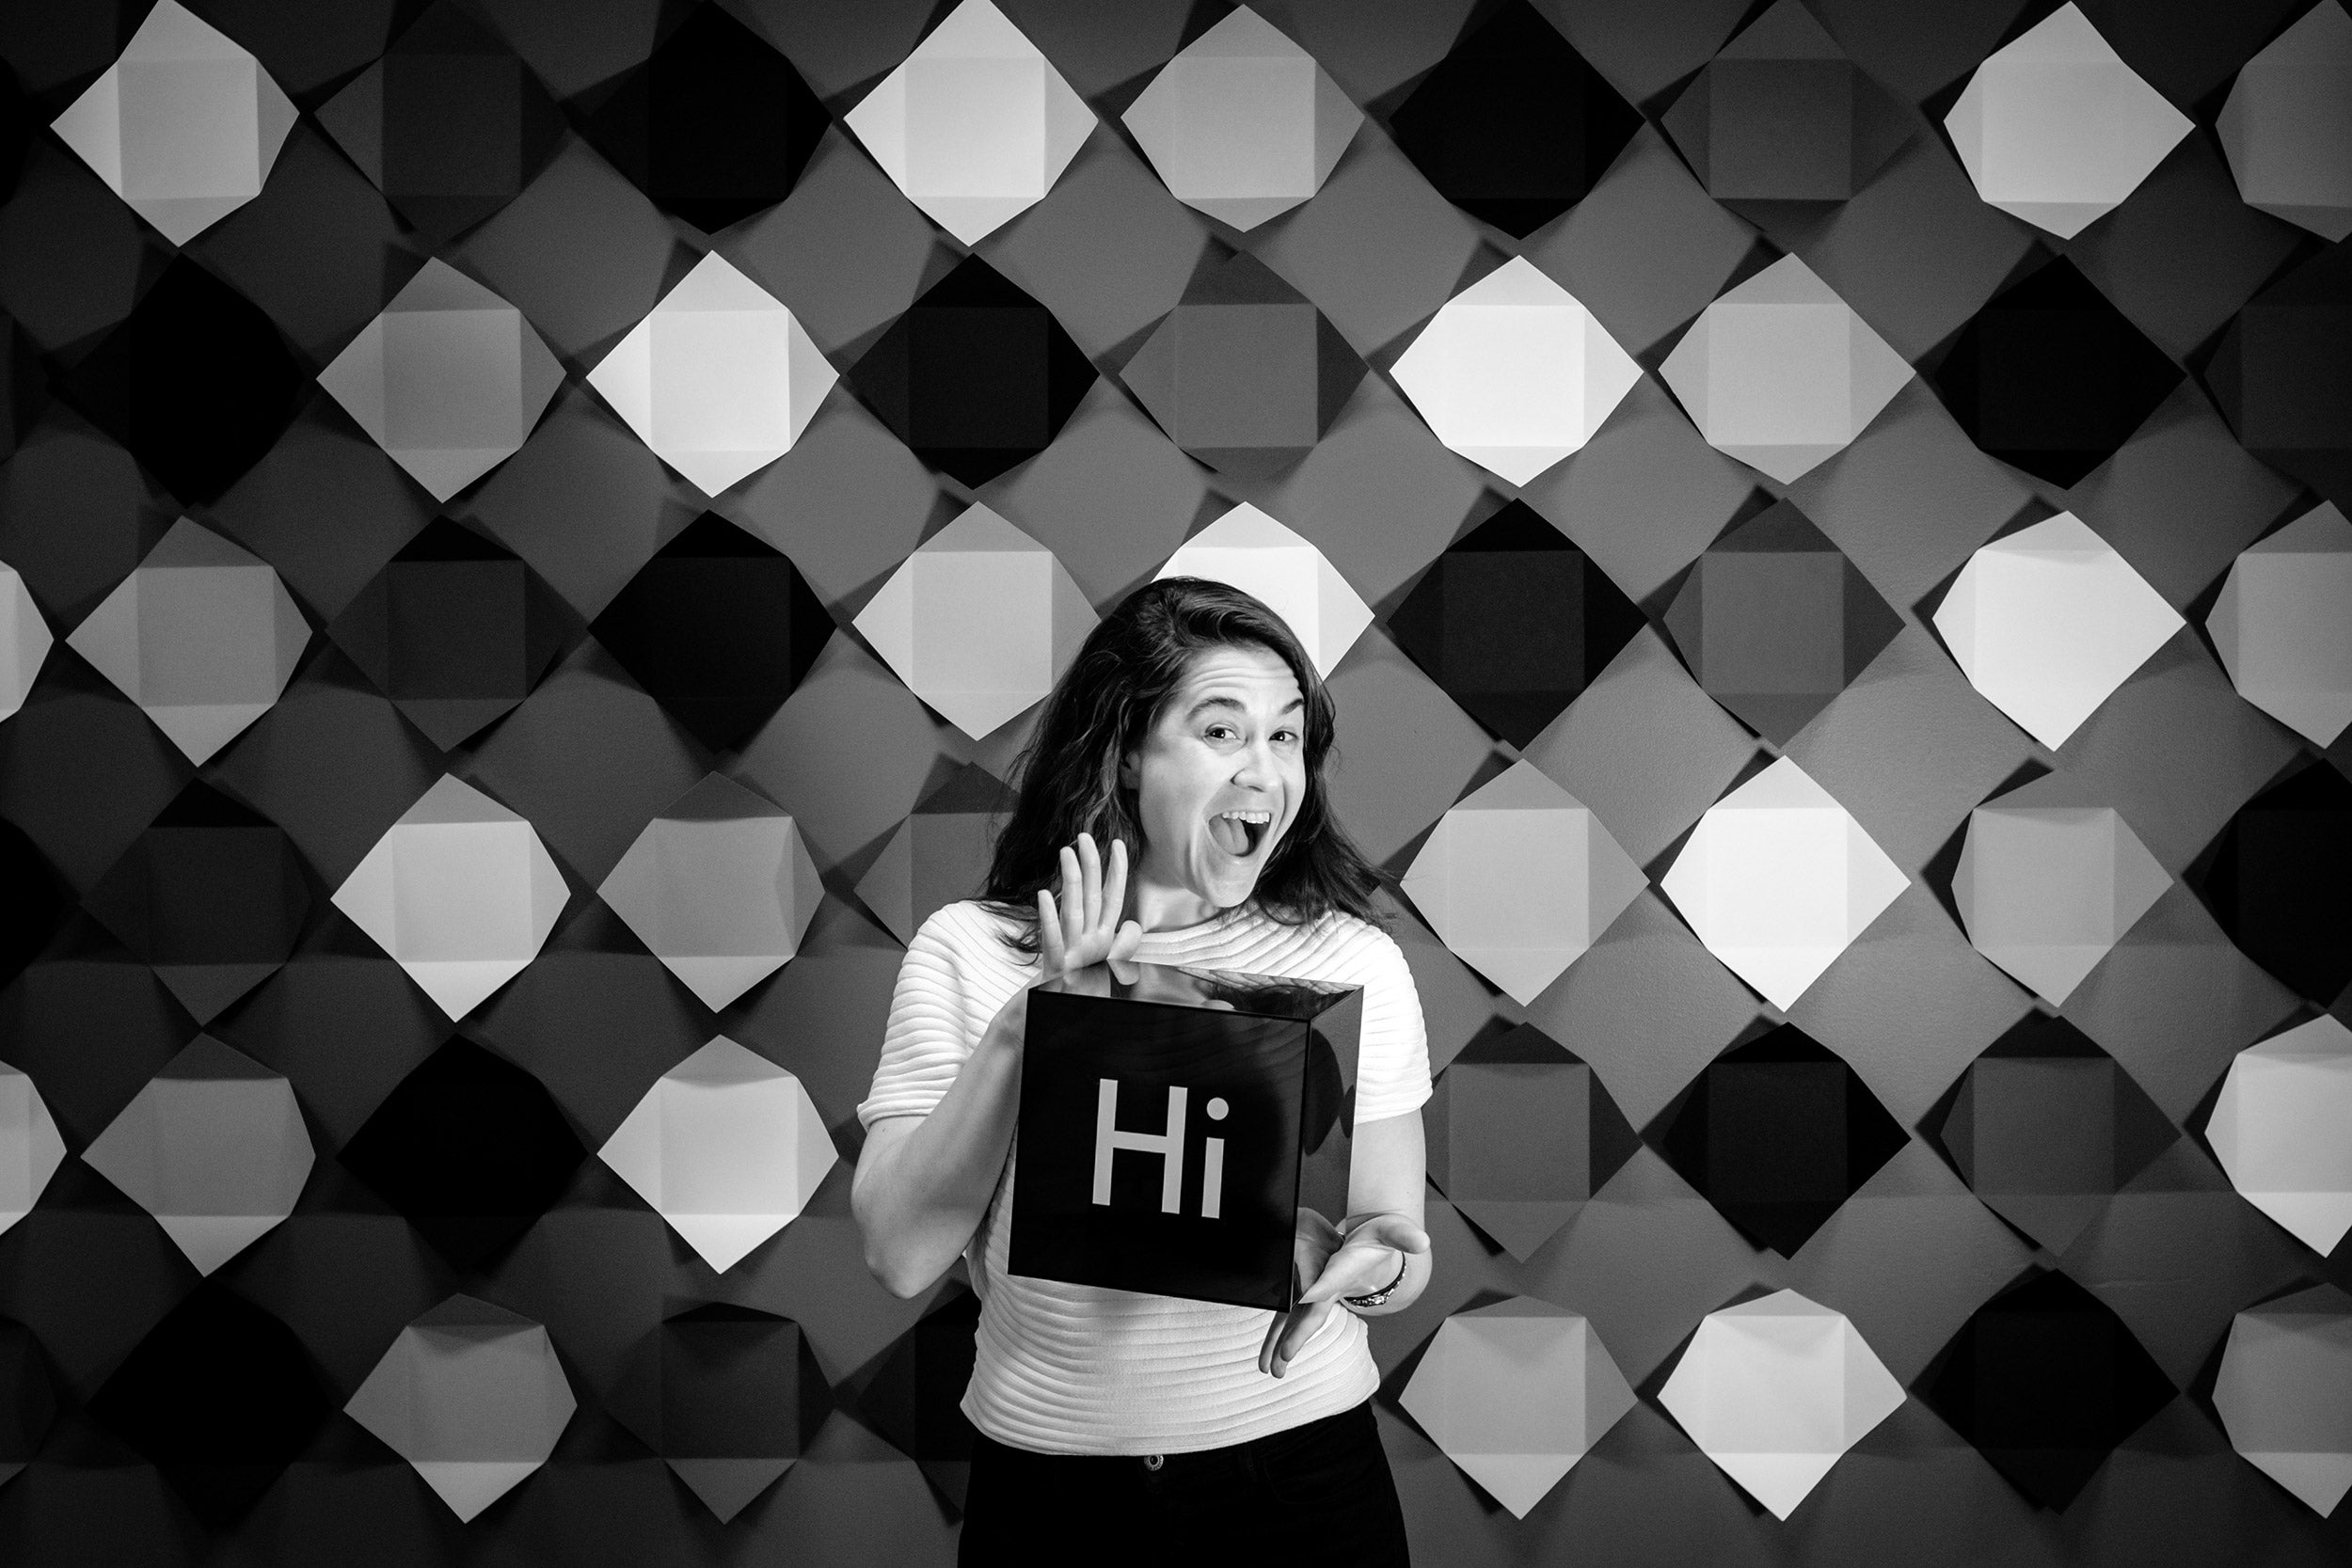 Laura Kelley holding a Hi sign.